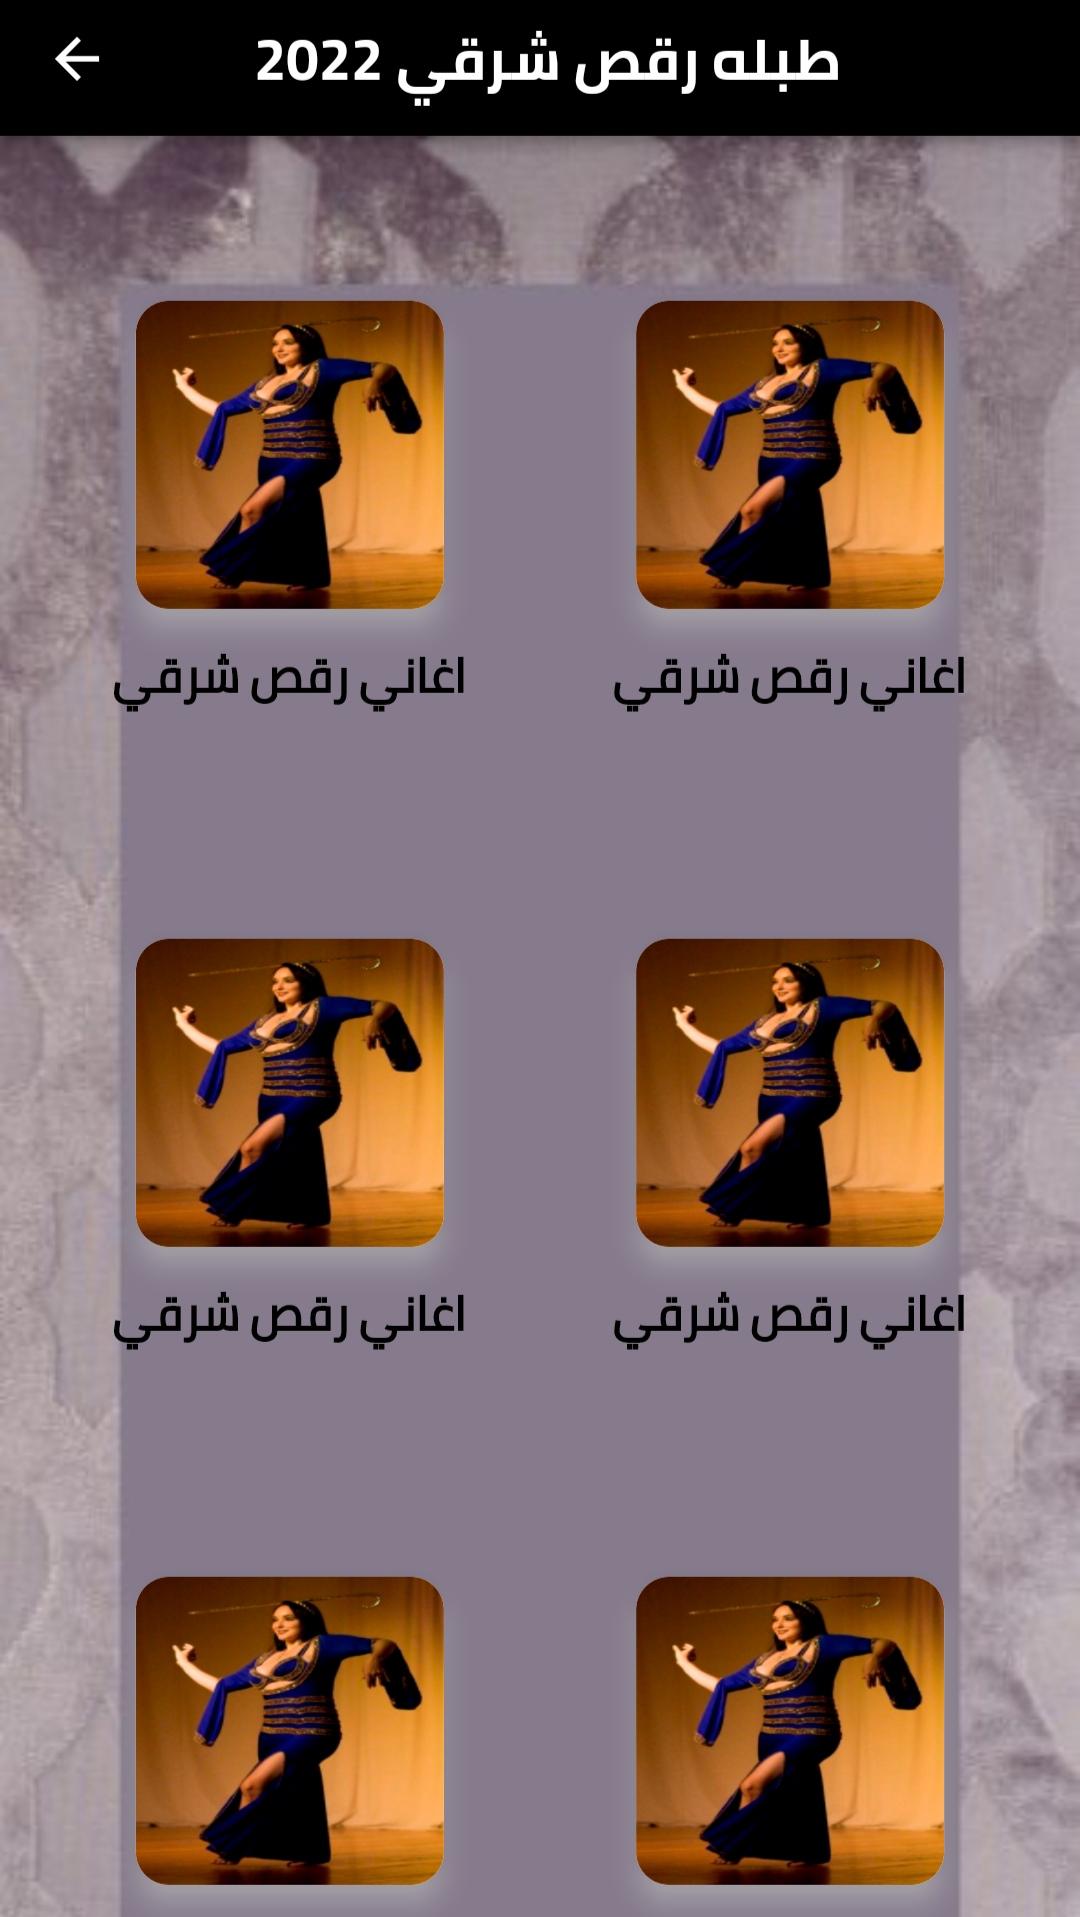 Download do APK de طبله رقص شرقي 2022 para Android